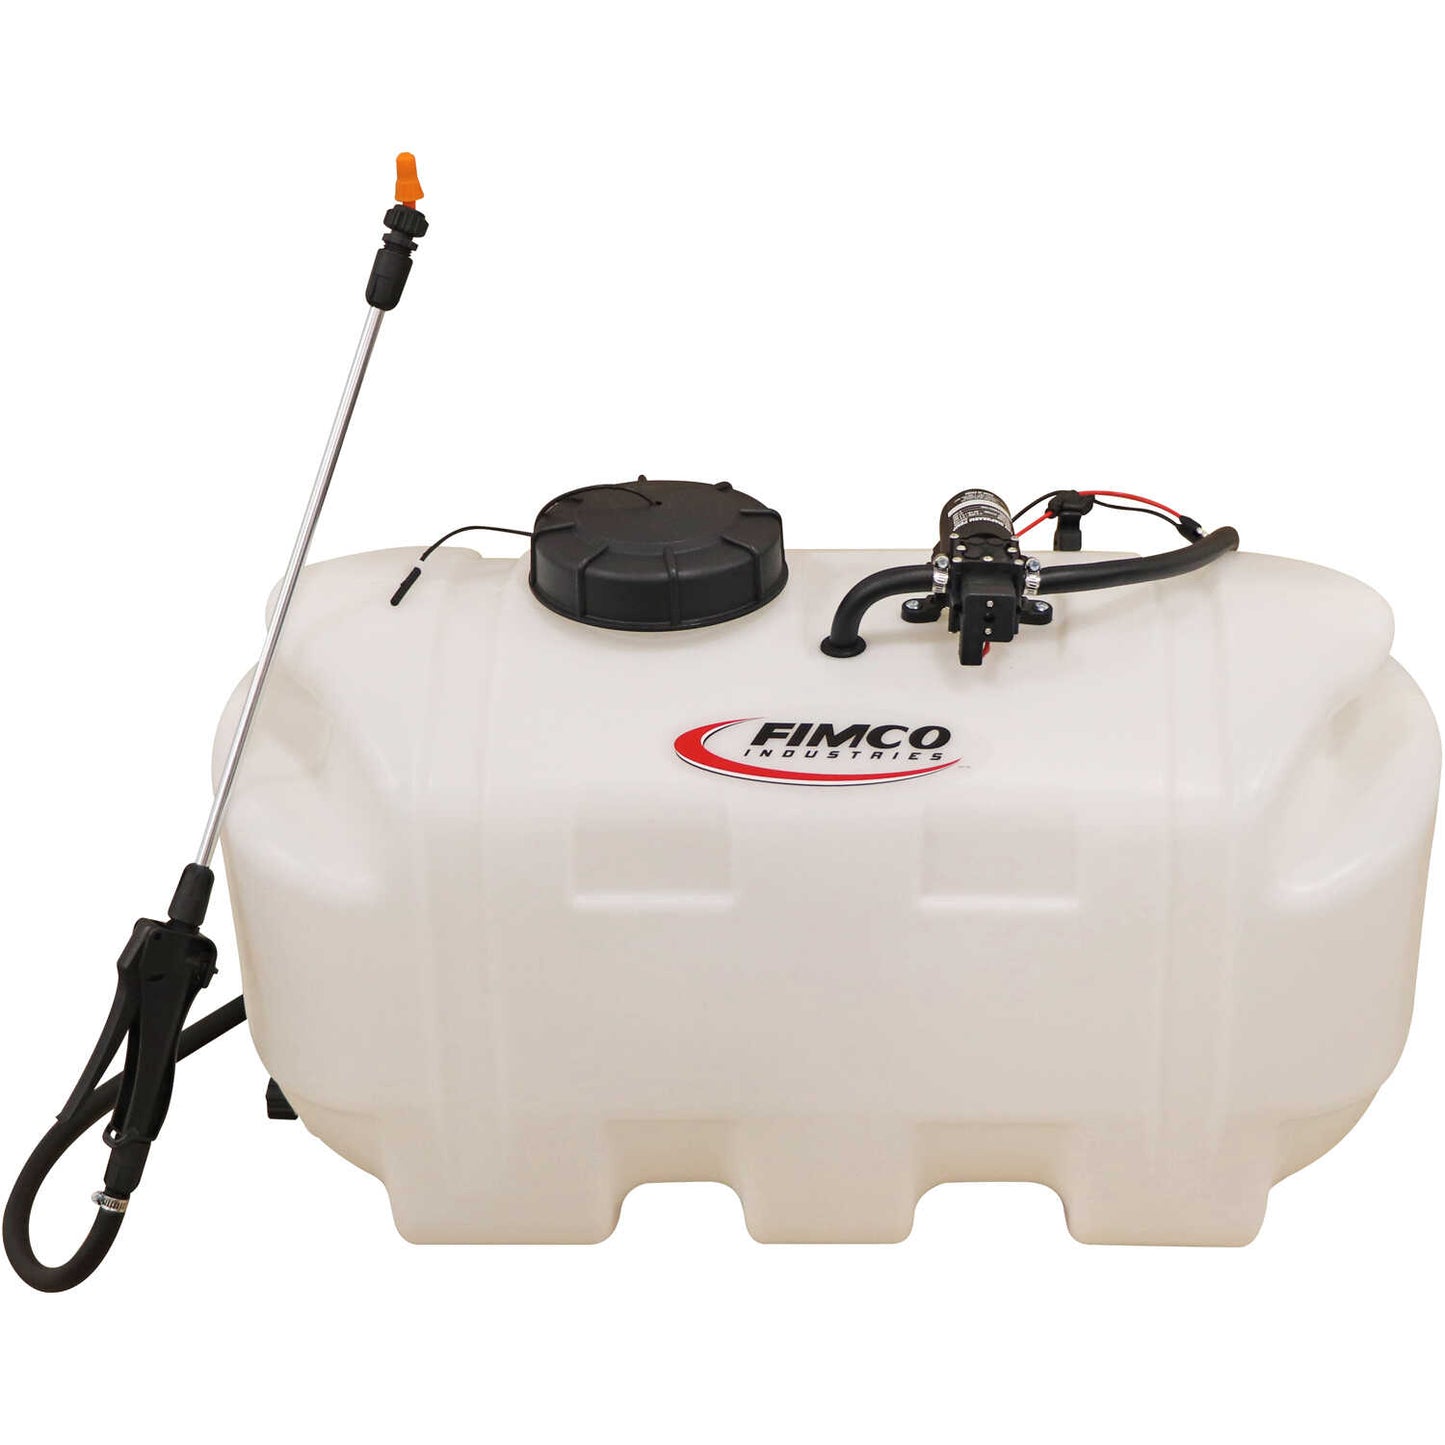 Fimco 15- & 25-Gallon Value Spot Sprayers 1.0 GPM Pump